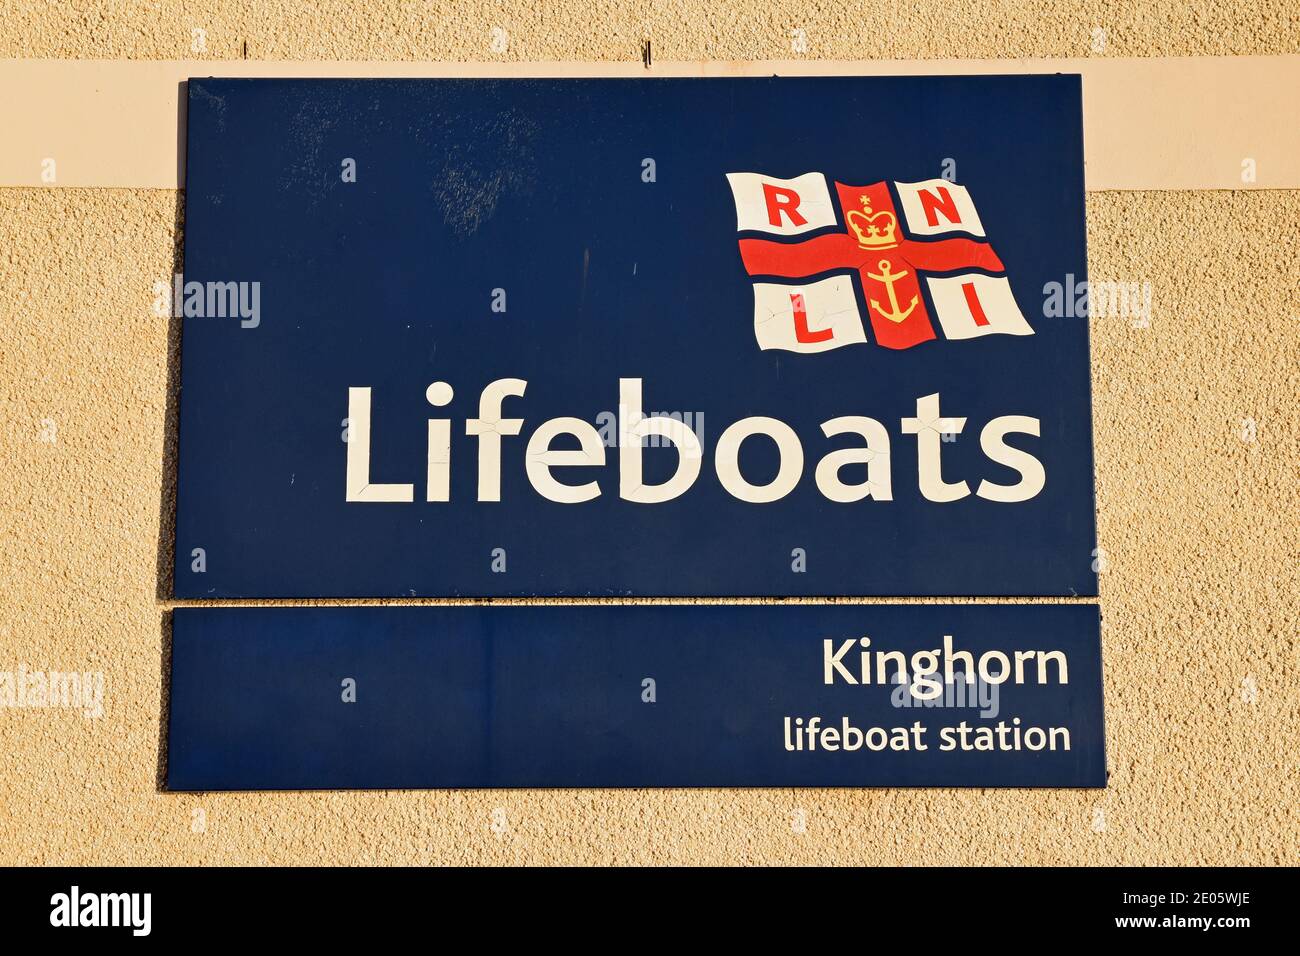 RNLI Lifeboats sign at Kinghorn lifeboat station, Fife, Scotland, UK Stock Photo